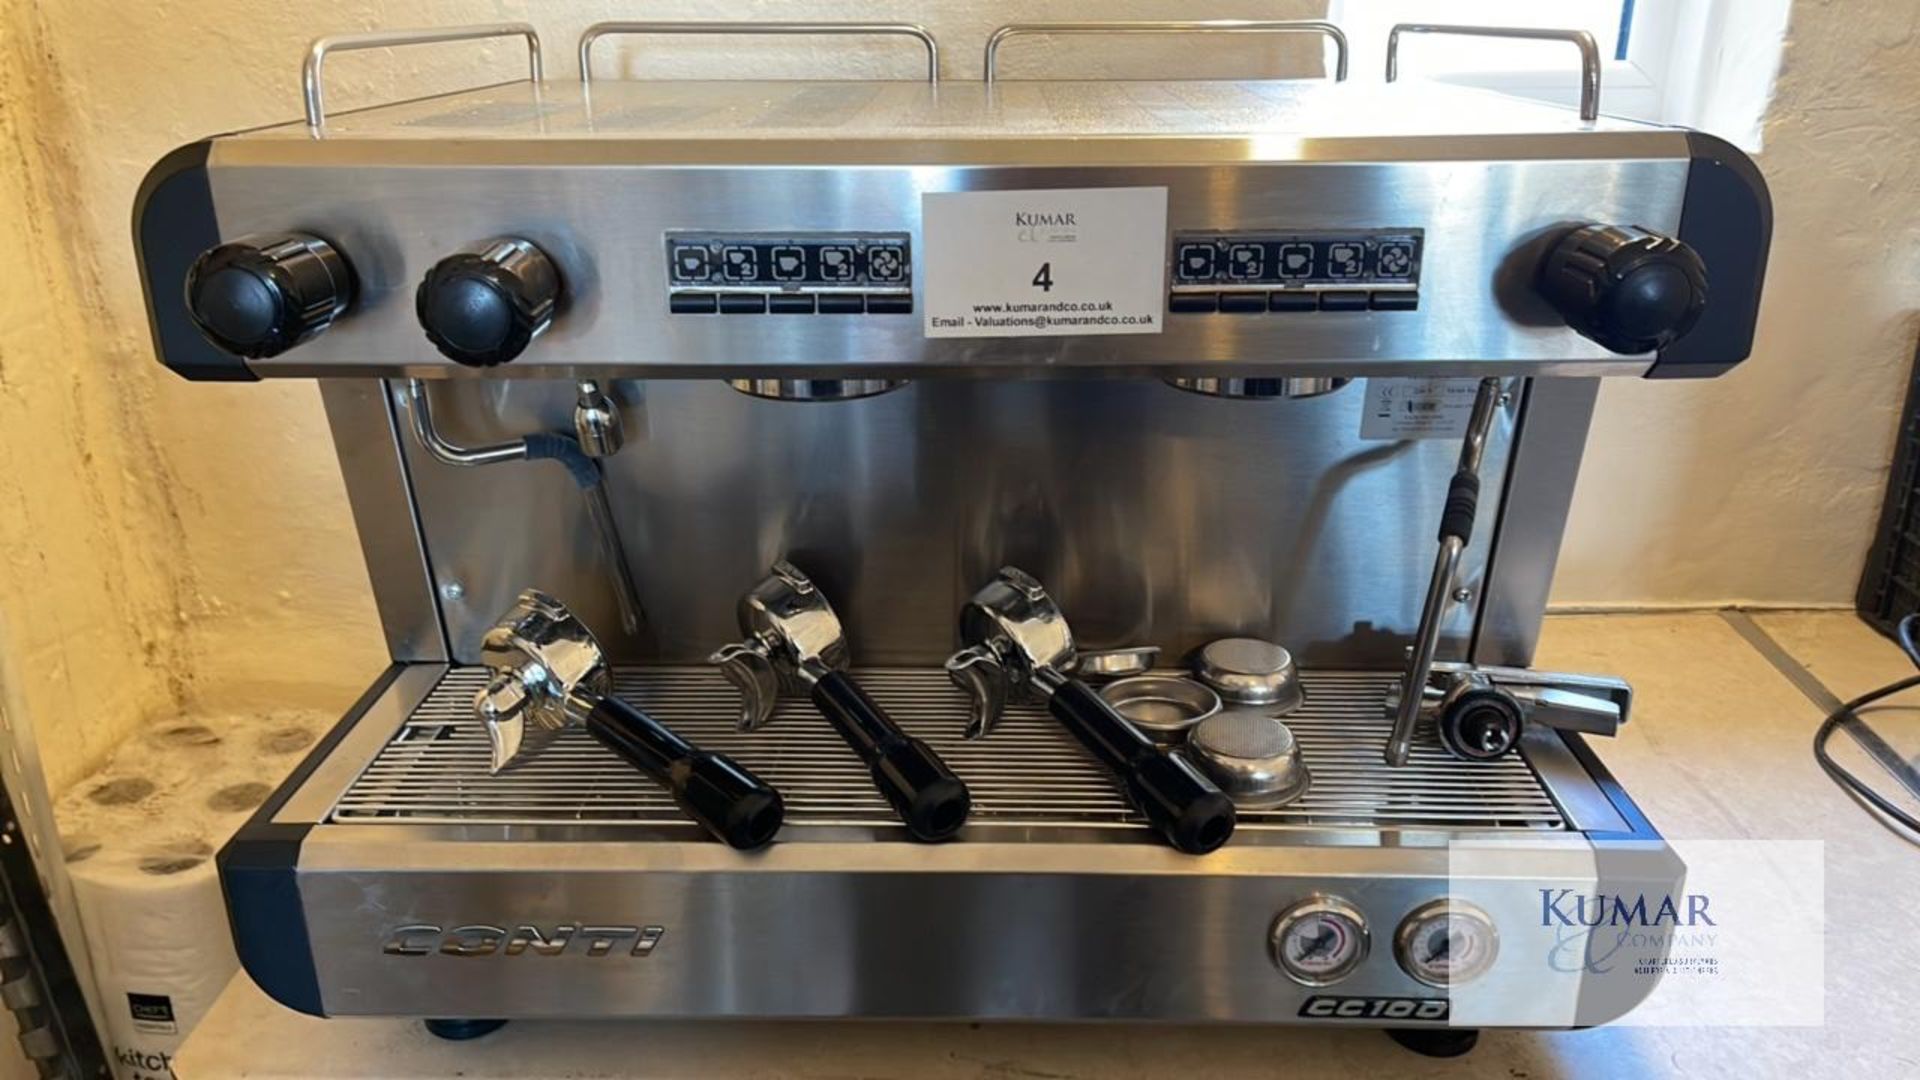 Conti CC102 TC Coffee Machine, Serial No. 136134 with Accessories as Shown - Monaco (2019) - Image 3 of 6